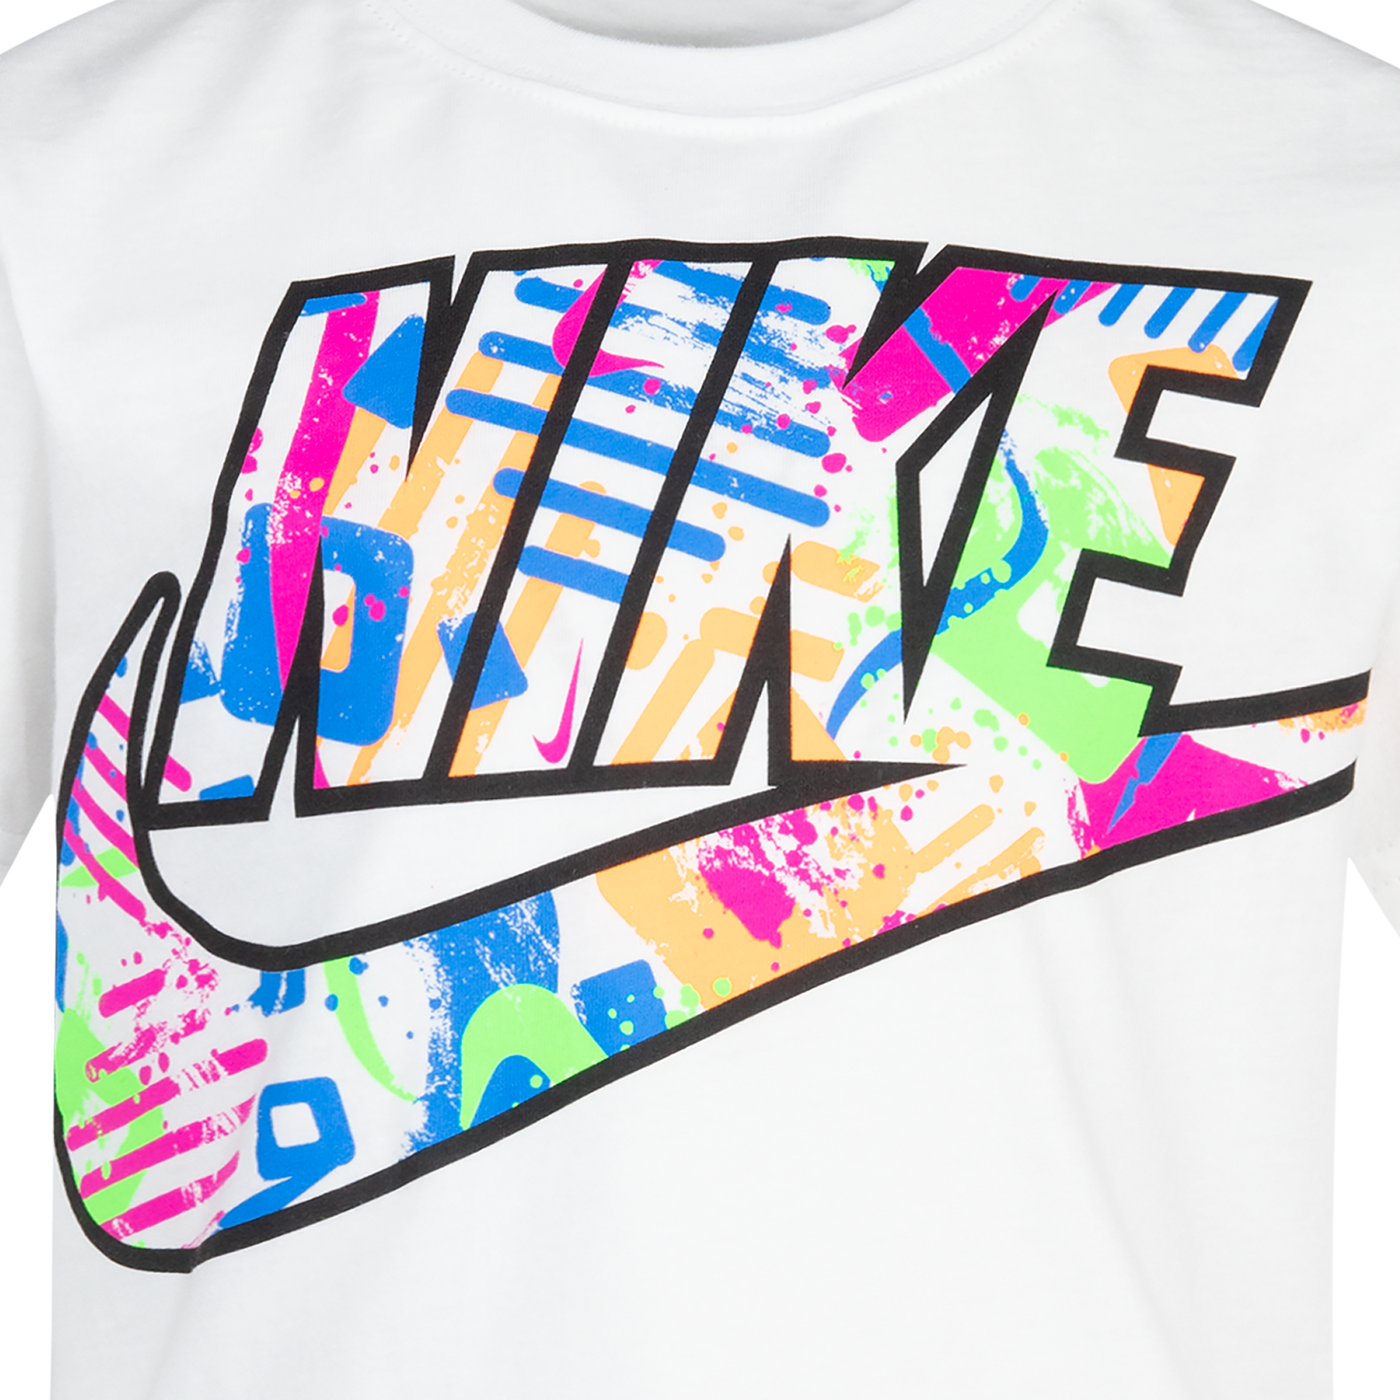 Nike Futura Sole Max Tee T Shirt Nike   